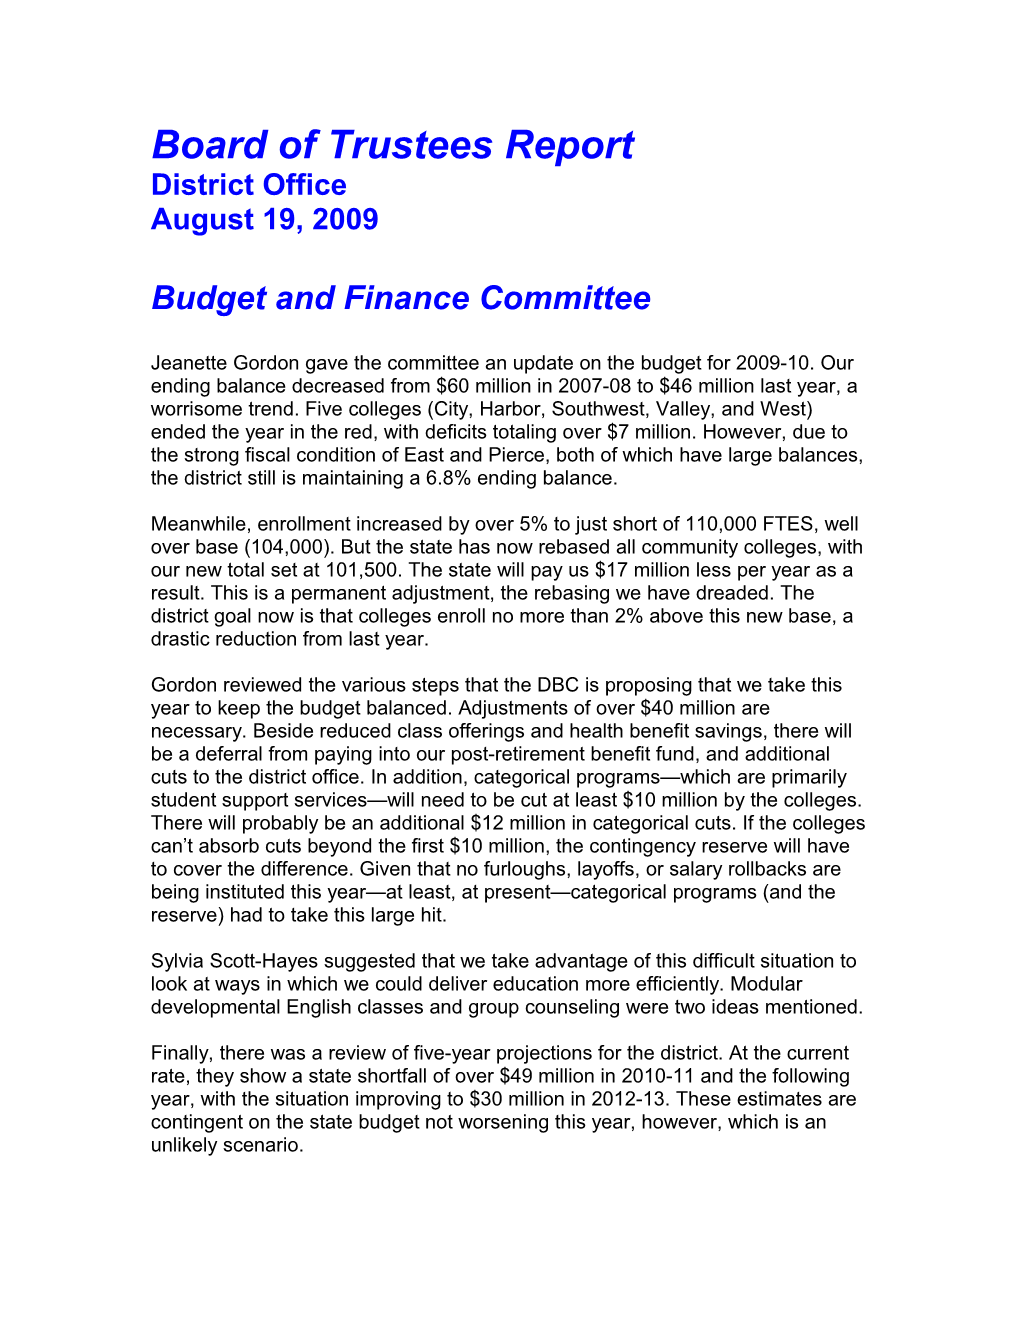 Board of Trustees Report s1